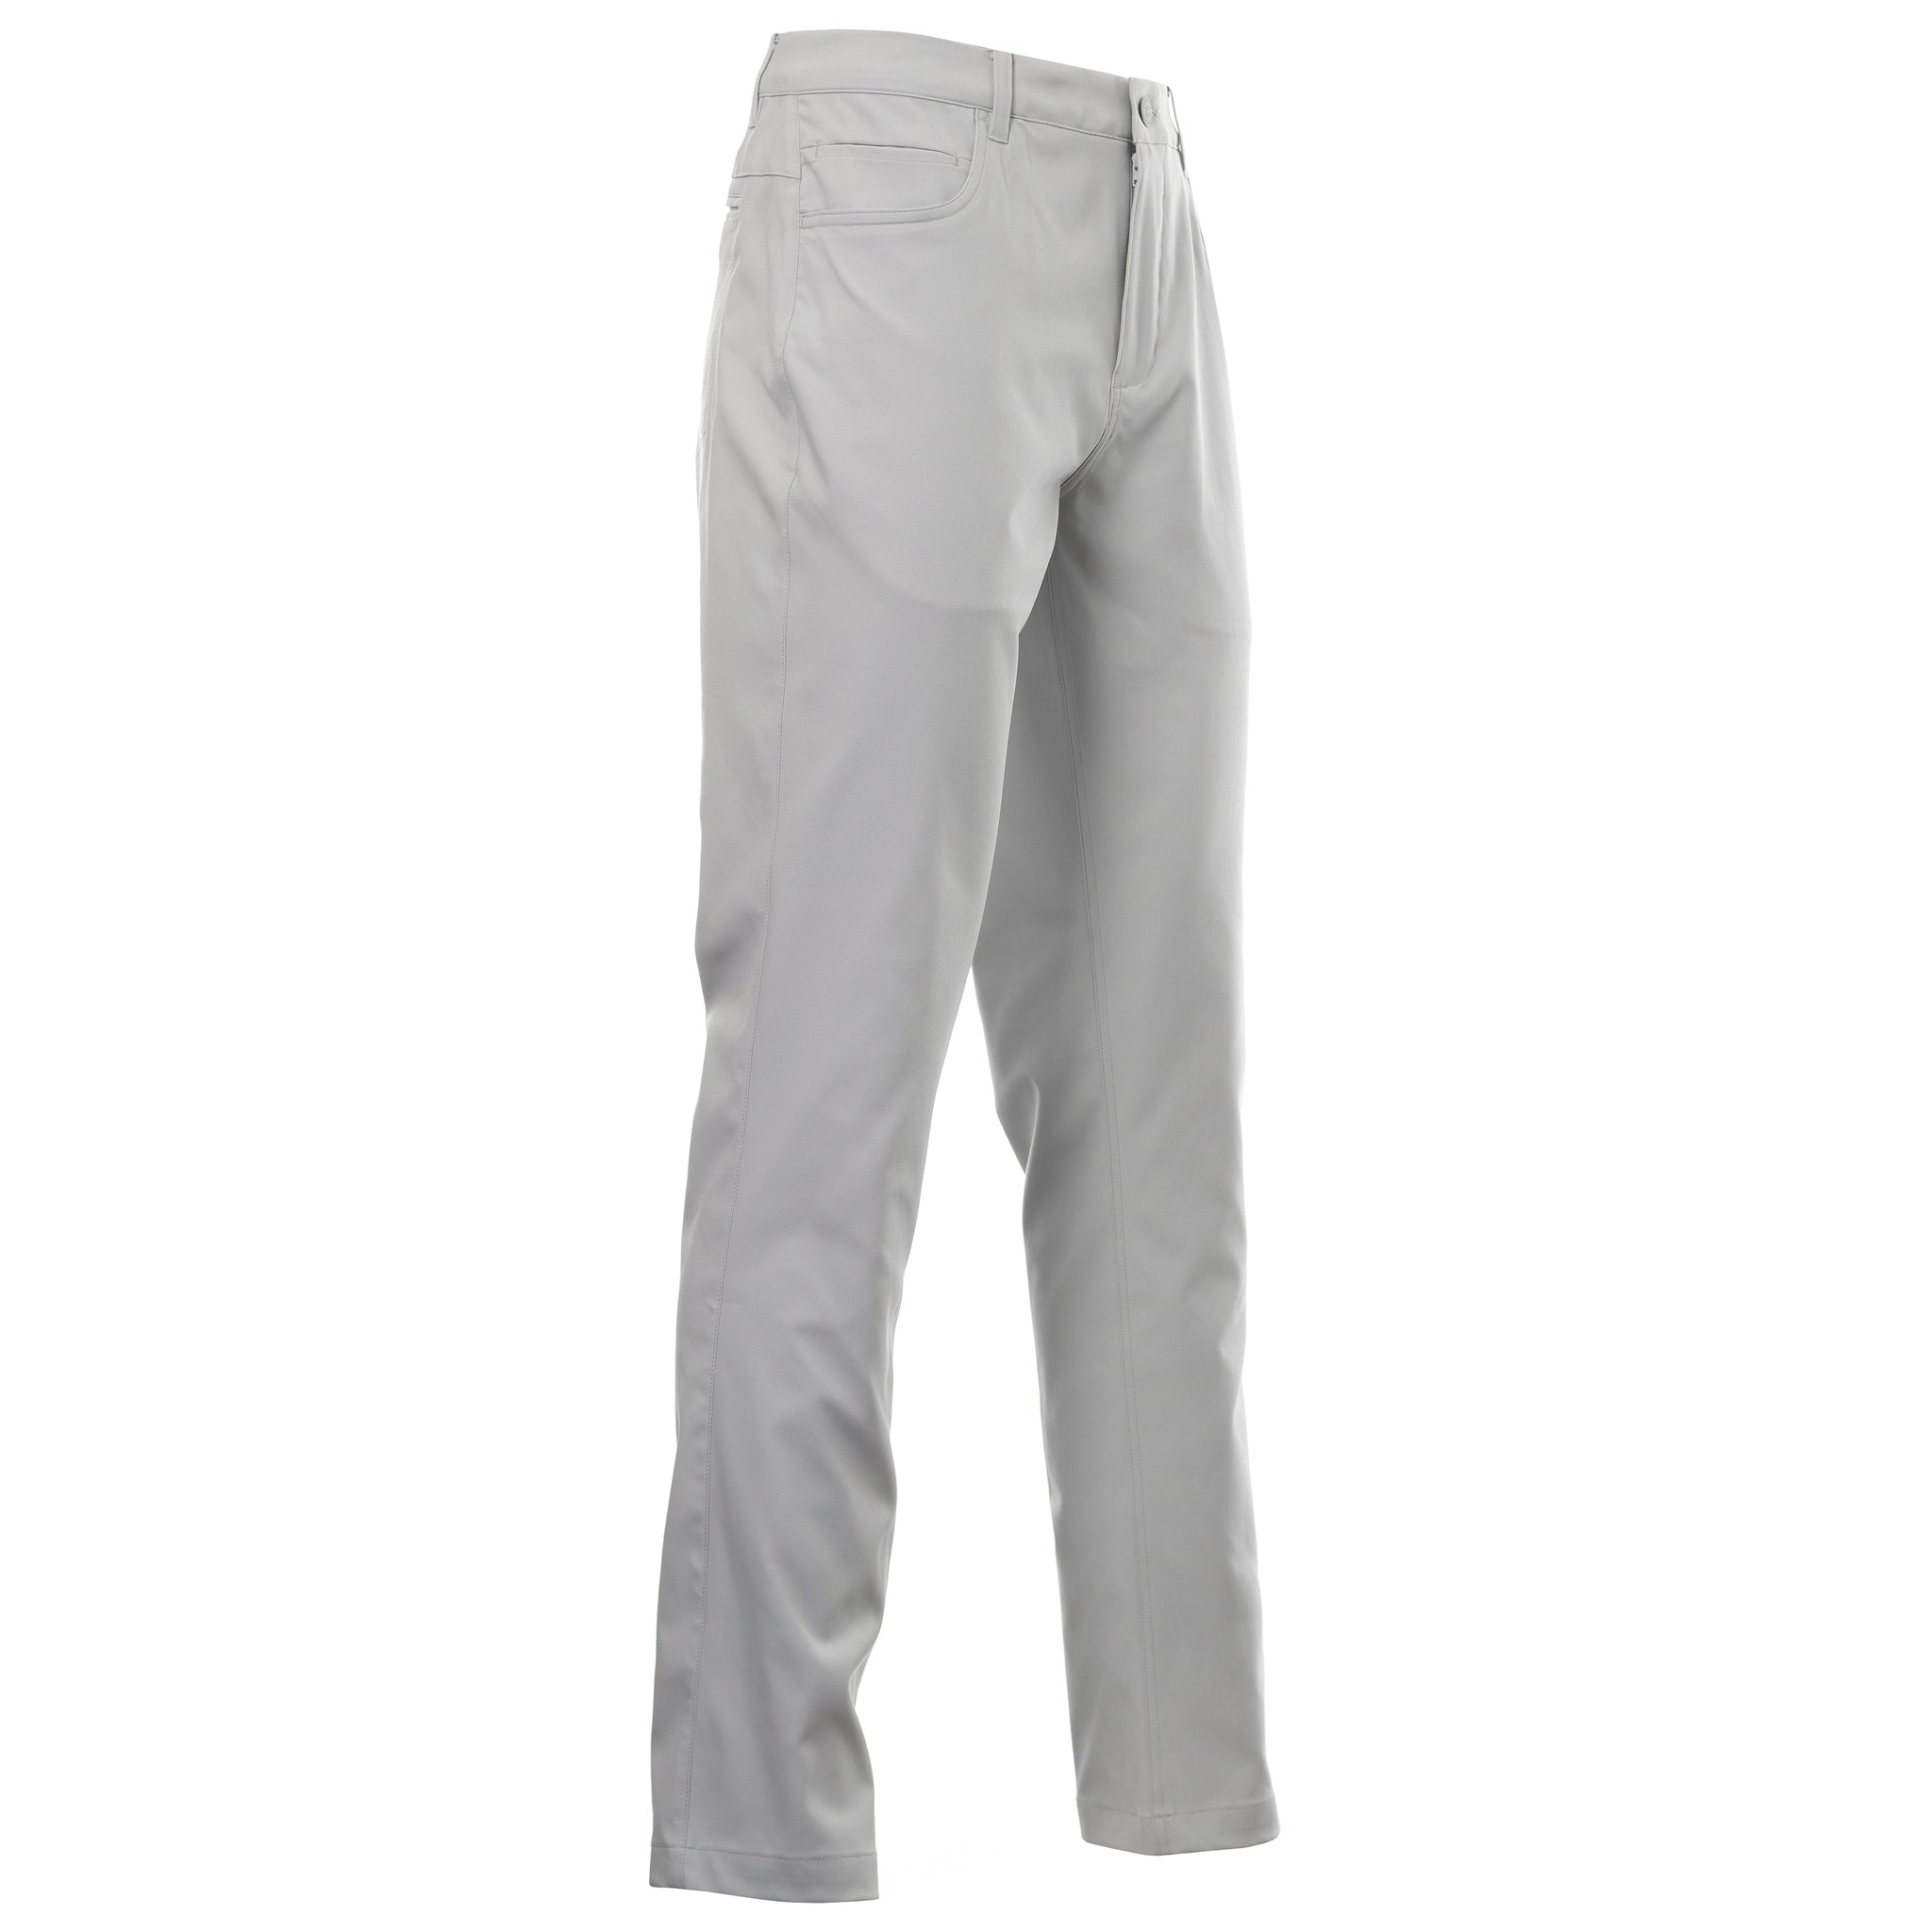 puma-golf-dealer-5-pocket-pant-535526-ash-grey-04